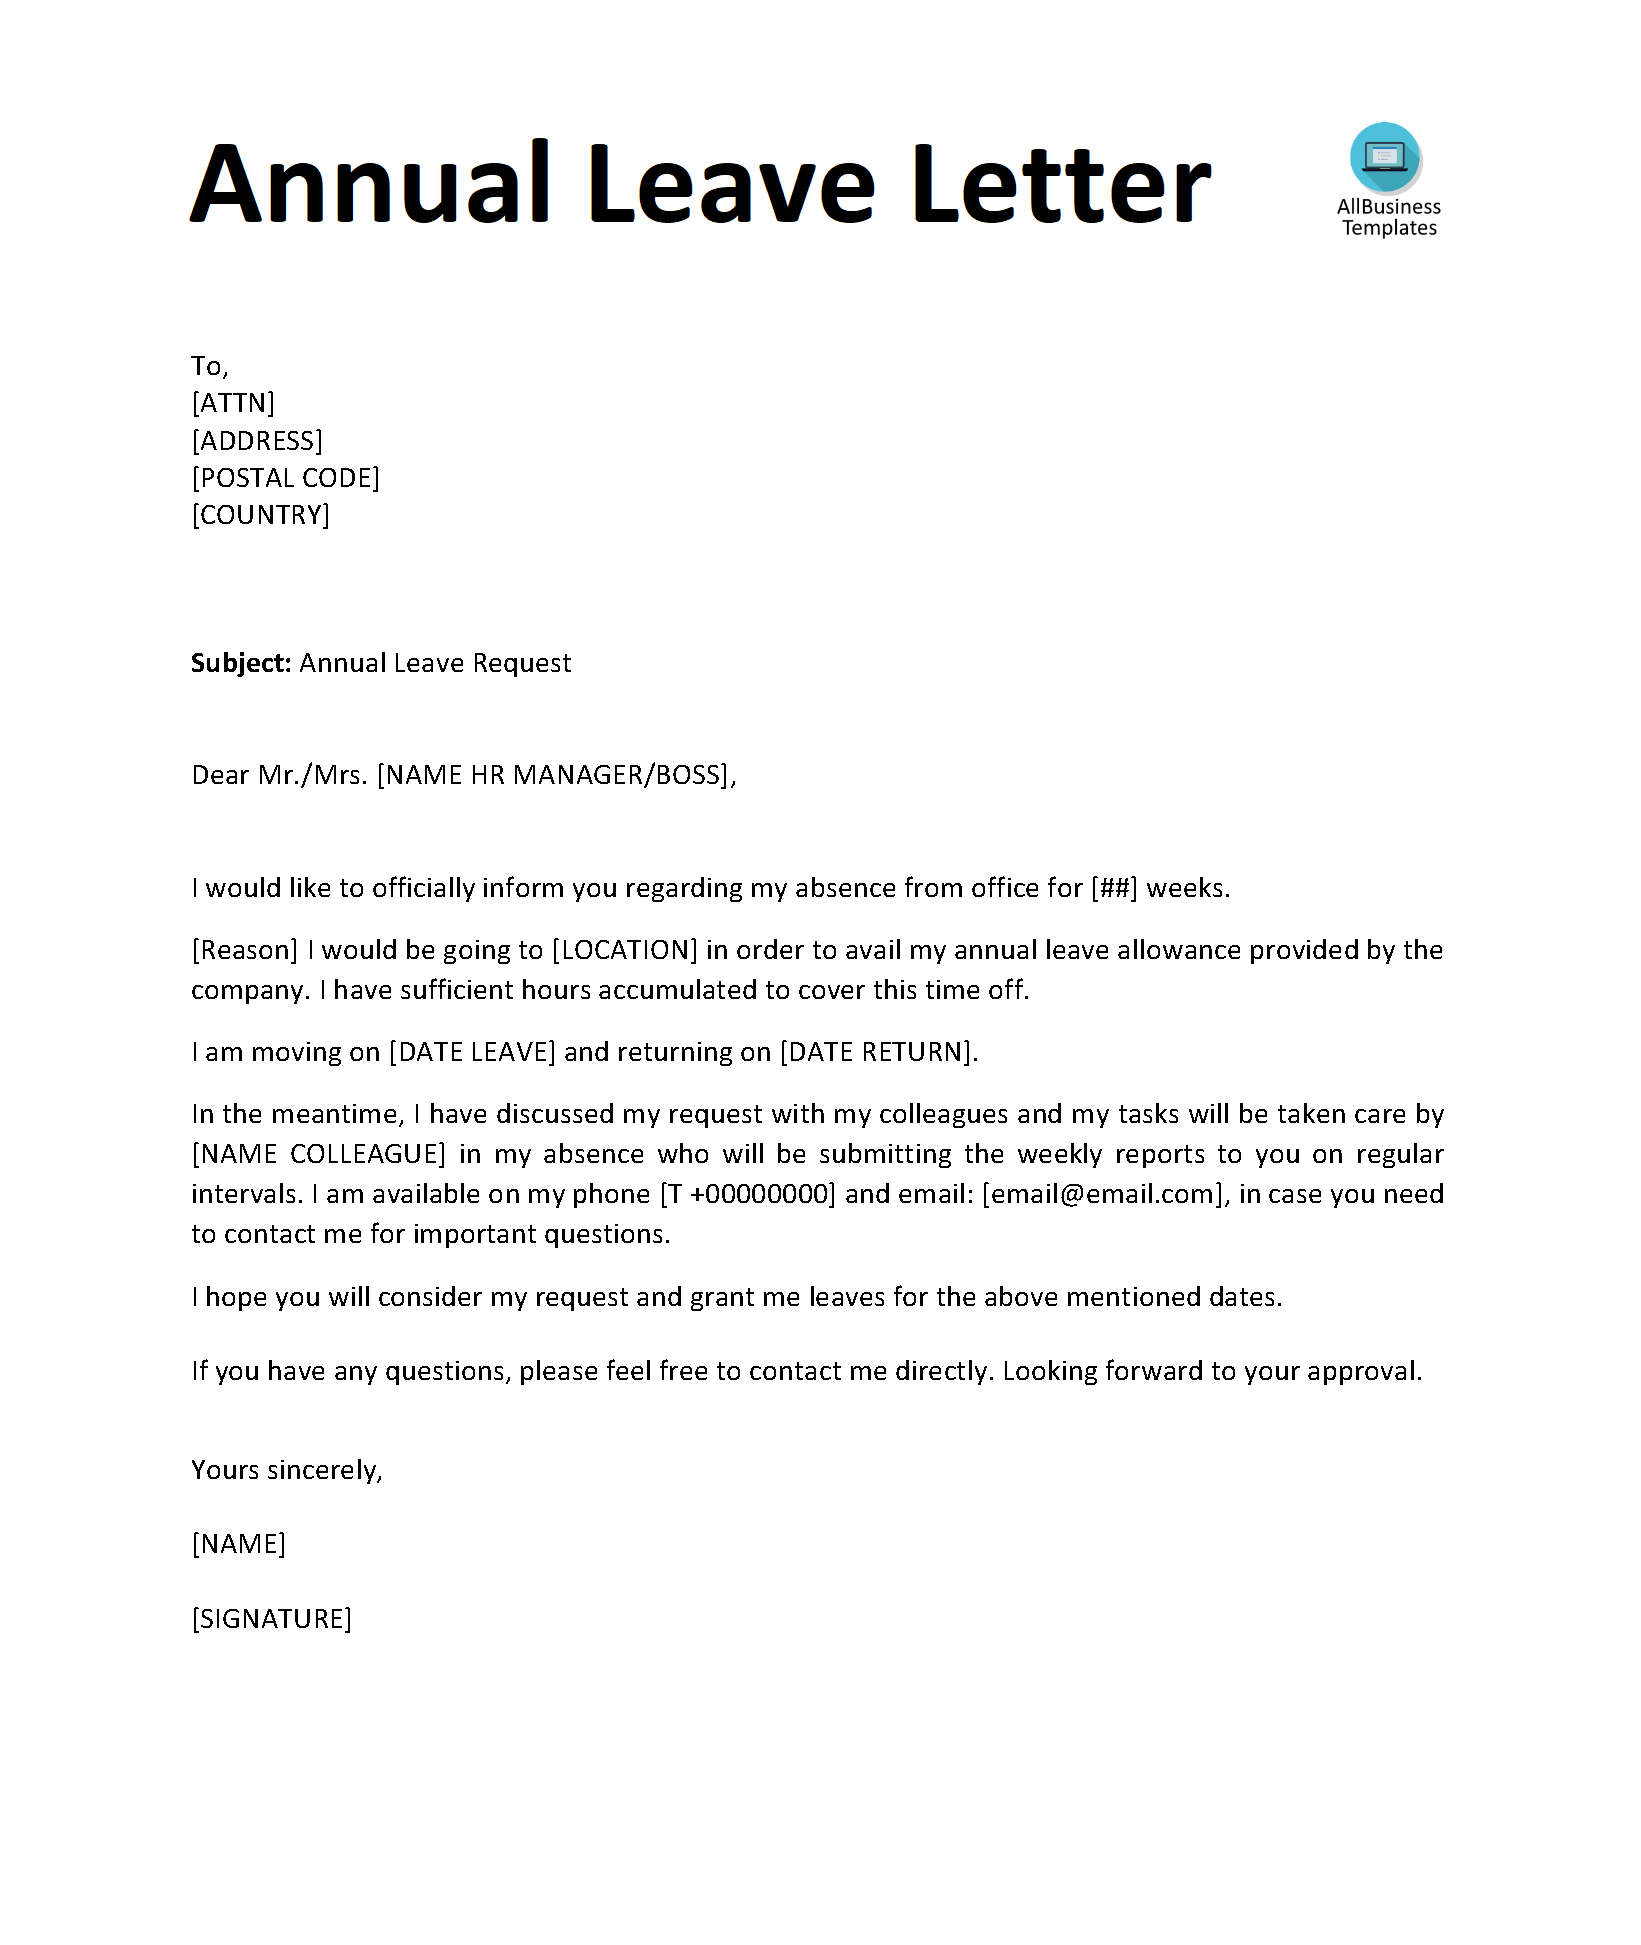 Annual Leave Letter Templates at allbusinesstemplates com